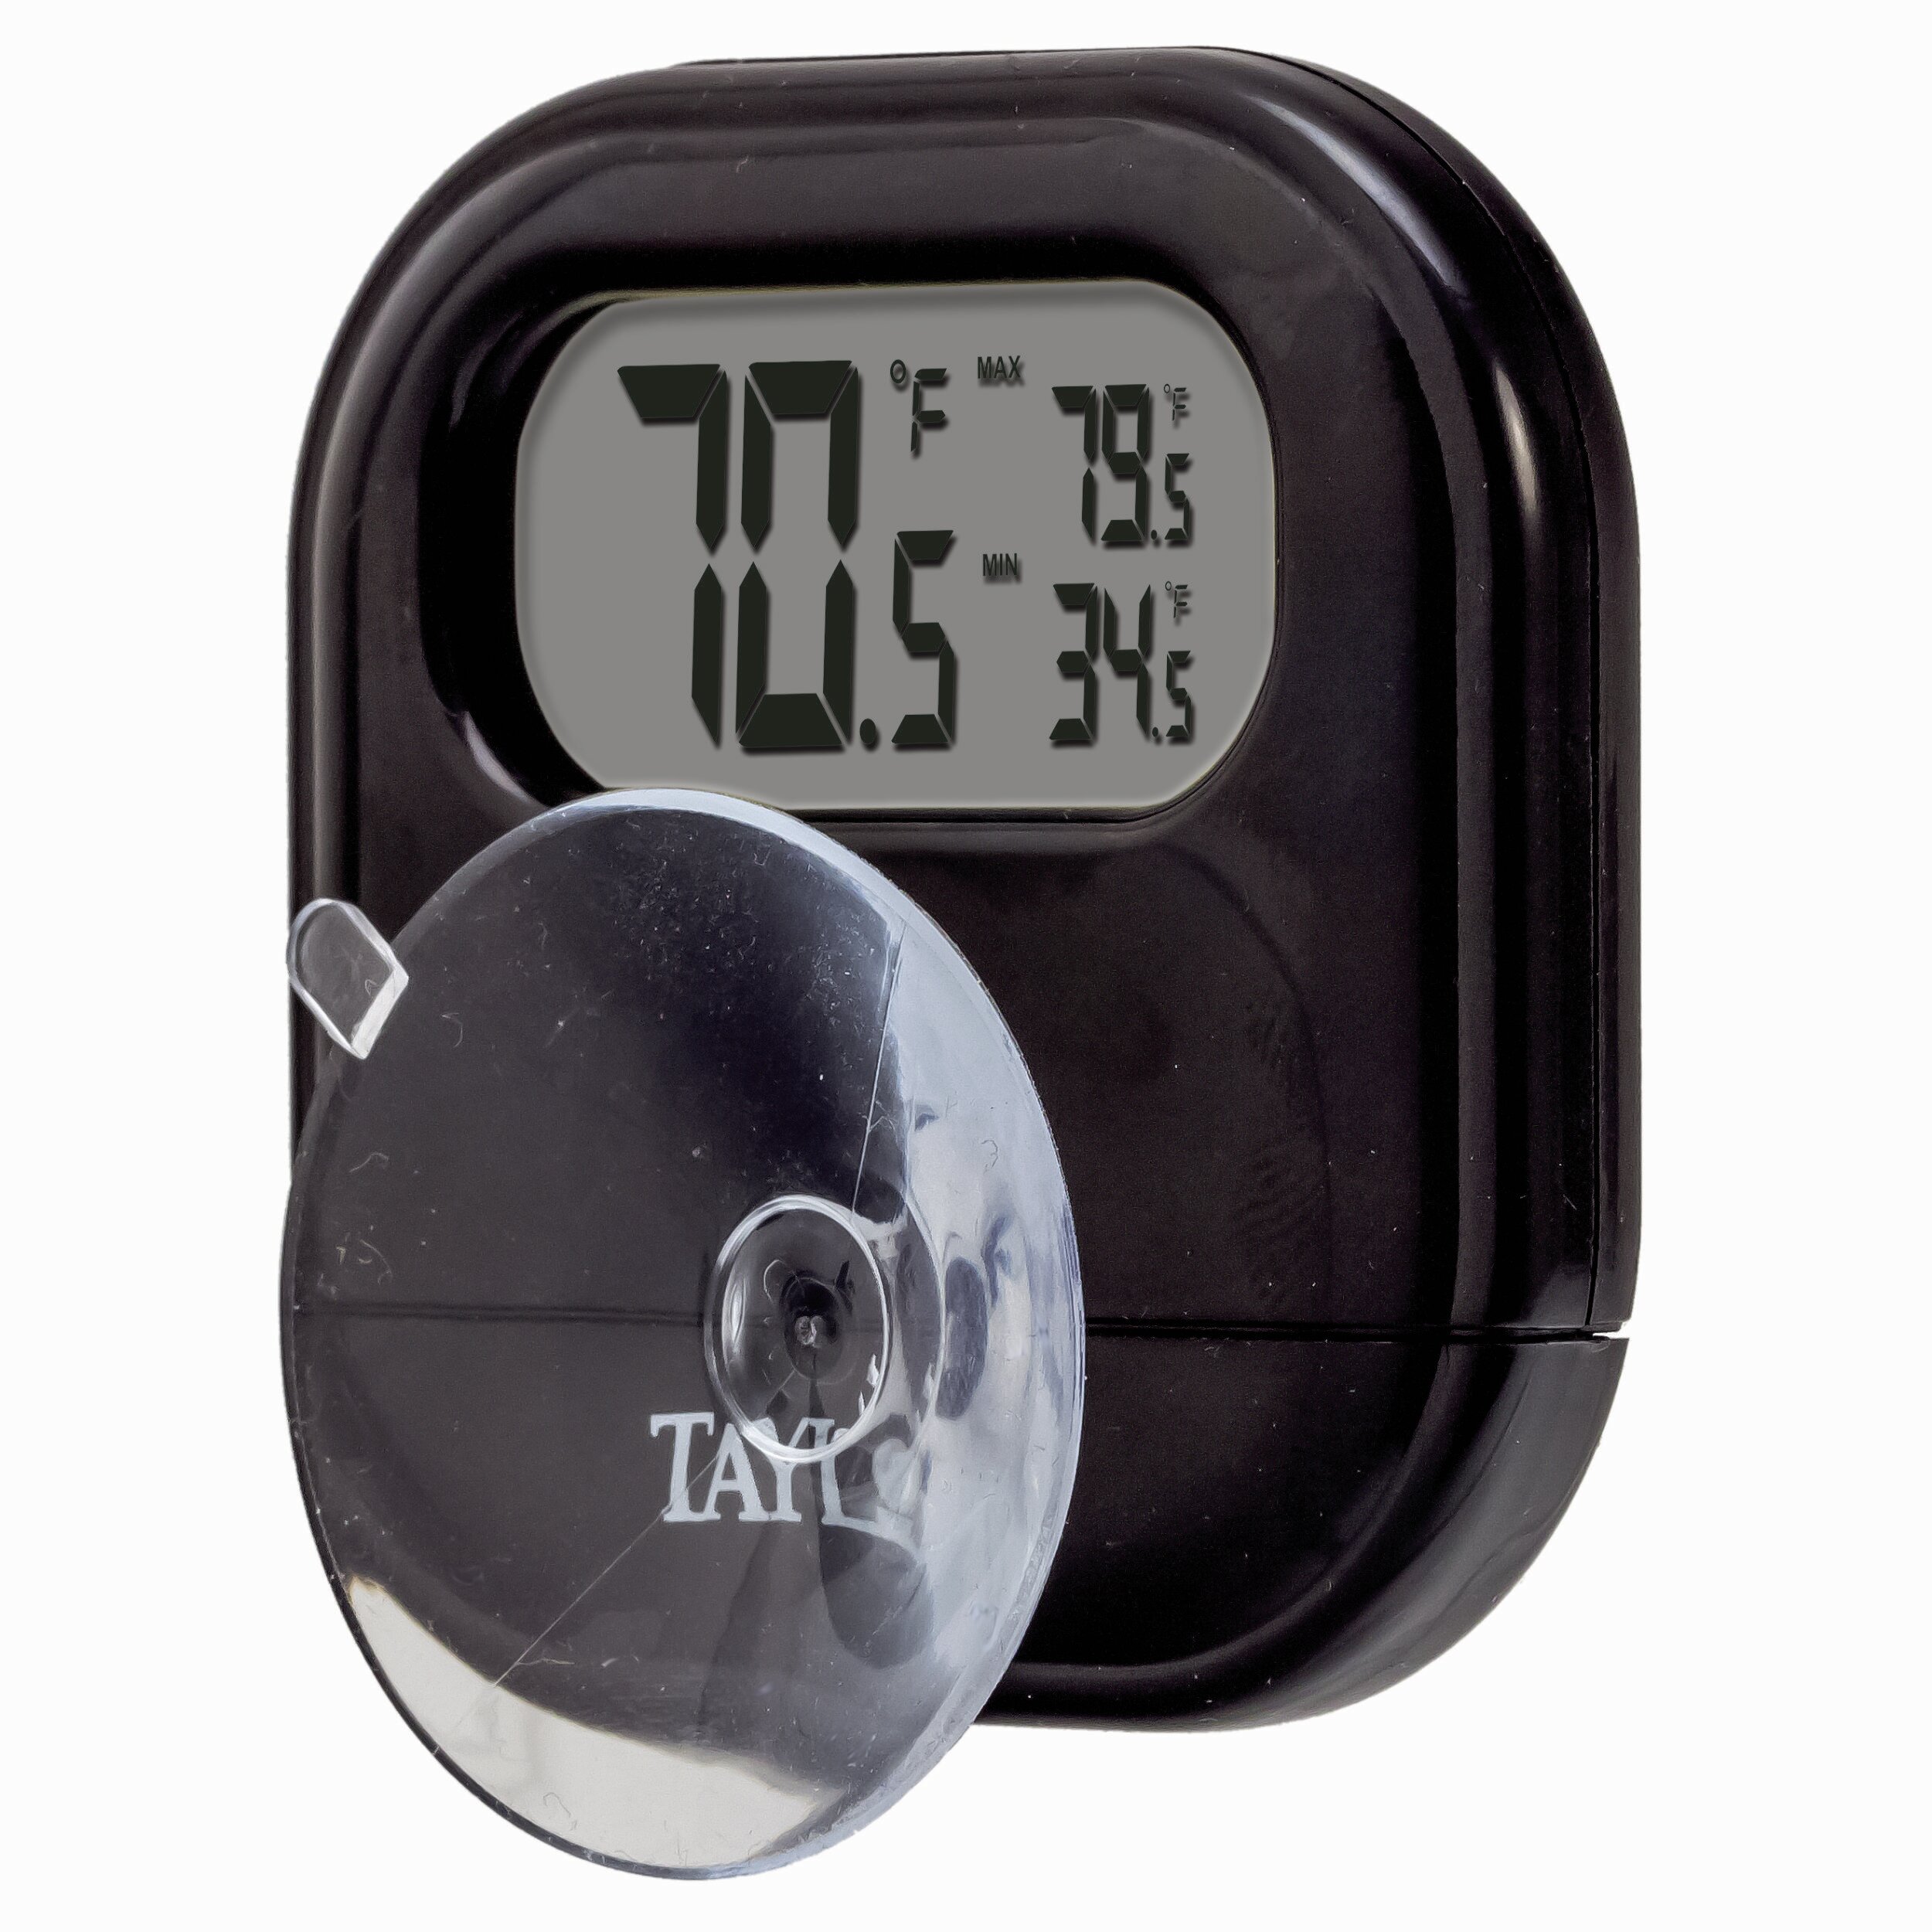 Taylor Wireless Digital Indoor/Outdoor Thermometer Hygrometer